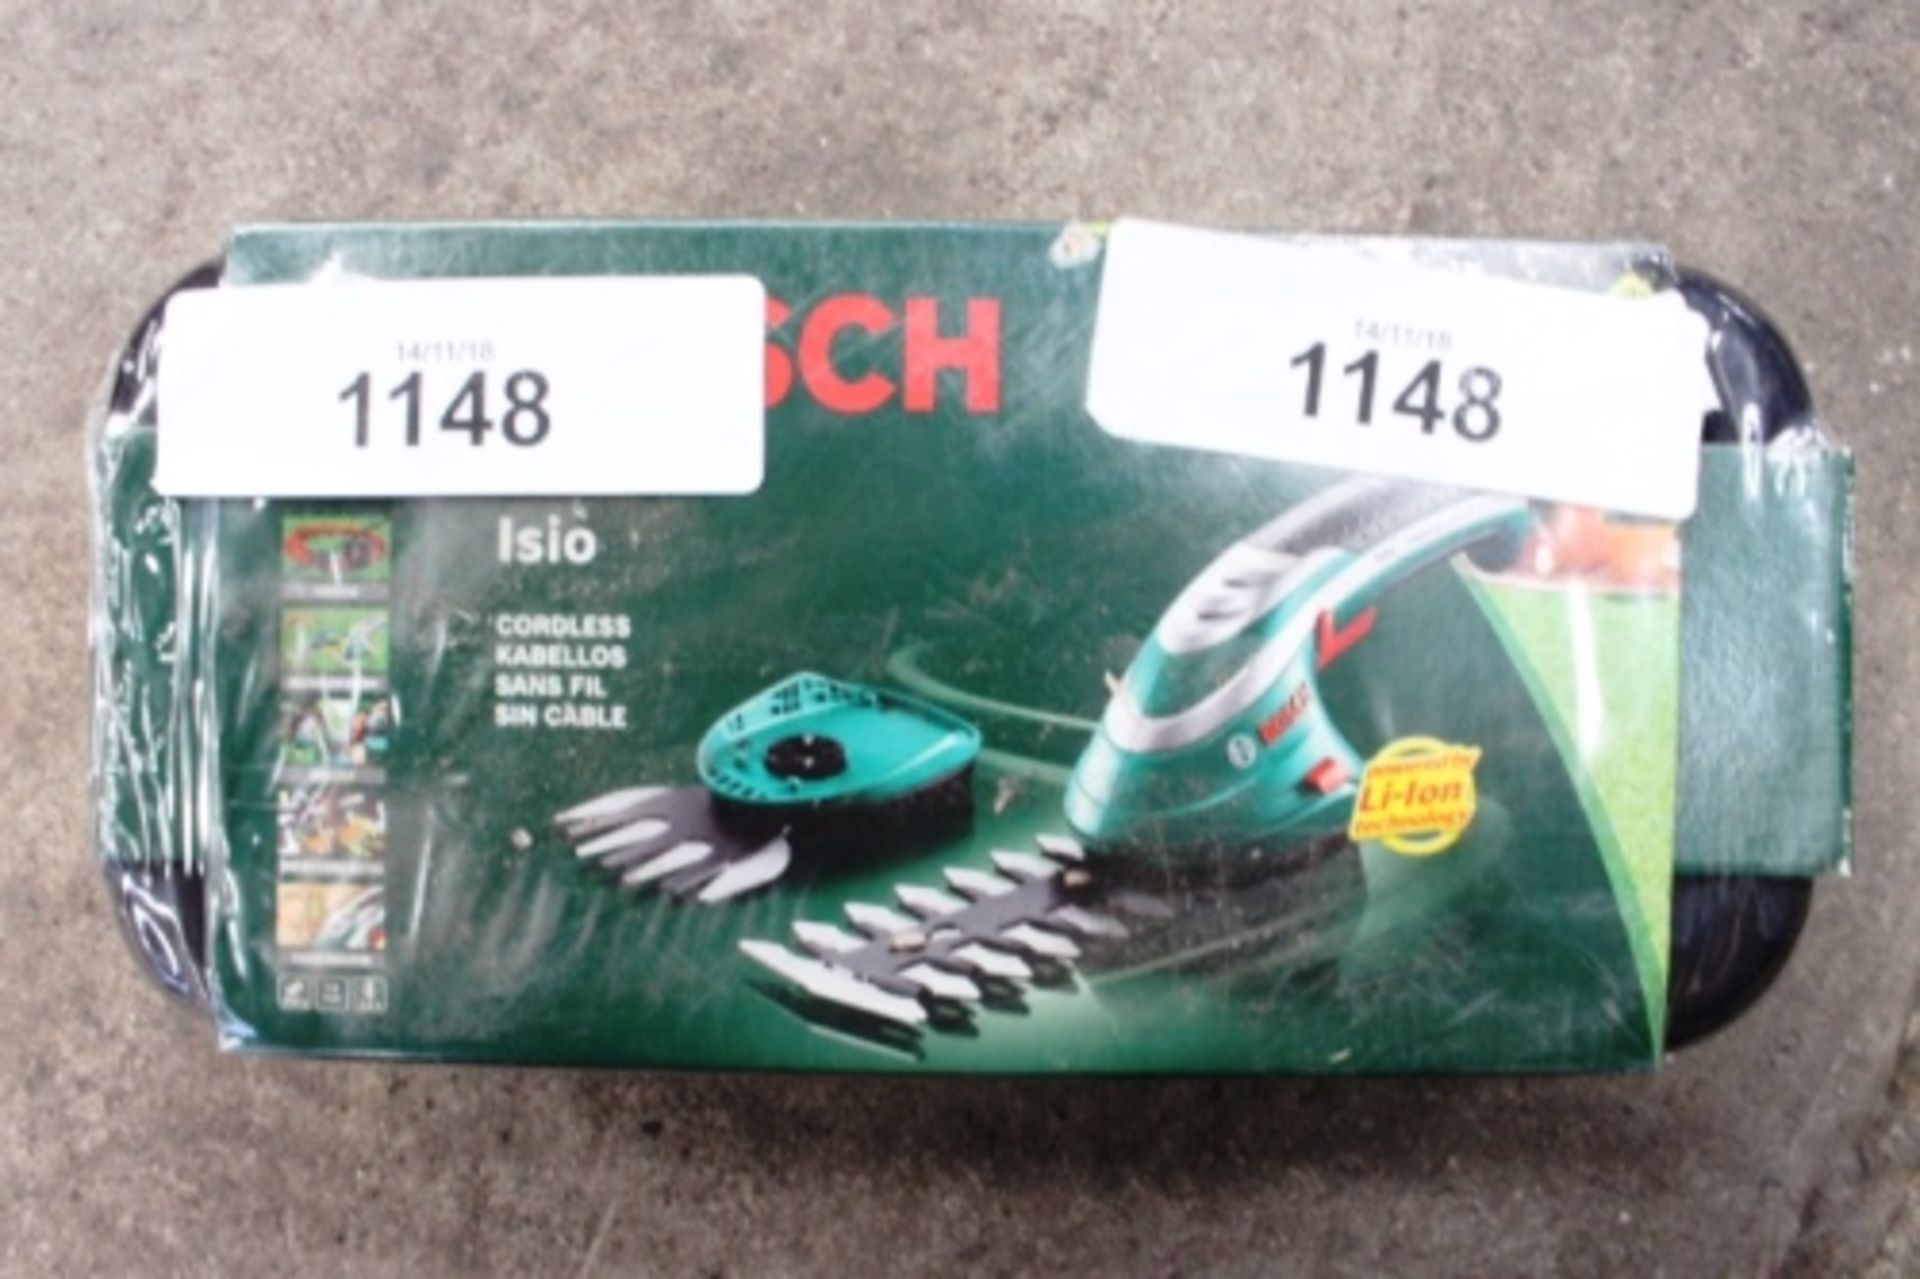 1 x Bosch IS10 cordless shrub and grass shear set, 306V, 230V, code 0600833172 - Sealed new (TC3)